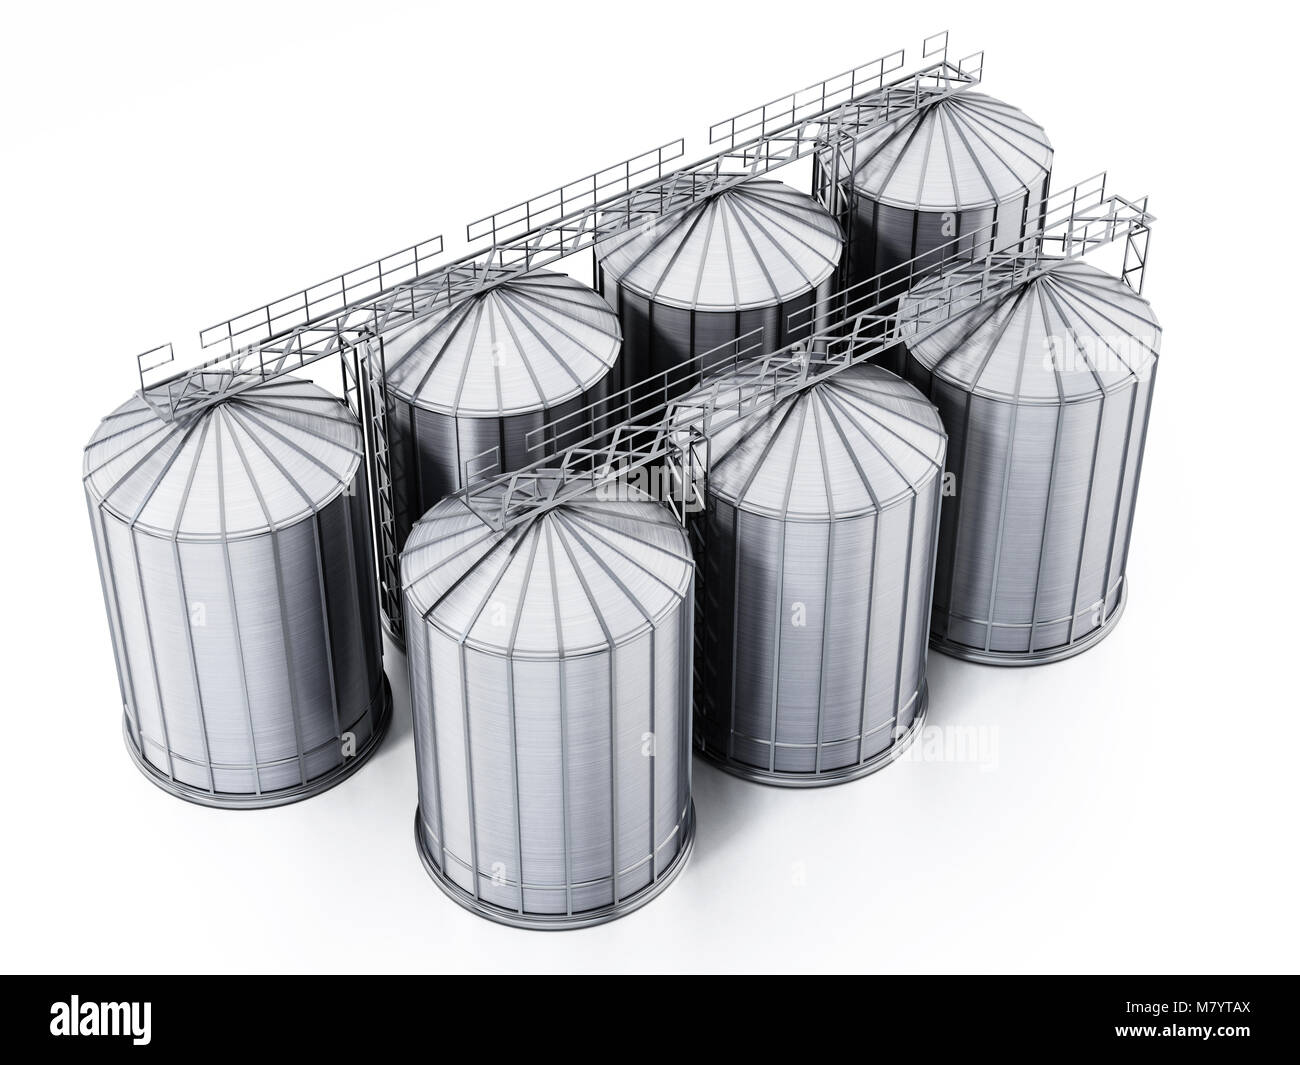 Corrugated steel grain silos isolated on white background. 3D illustration. Stock Photo